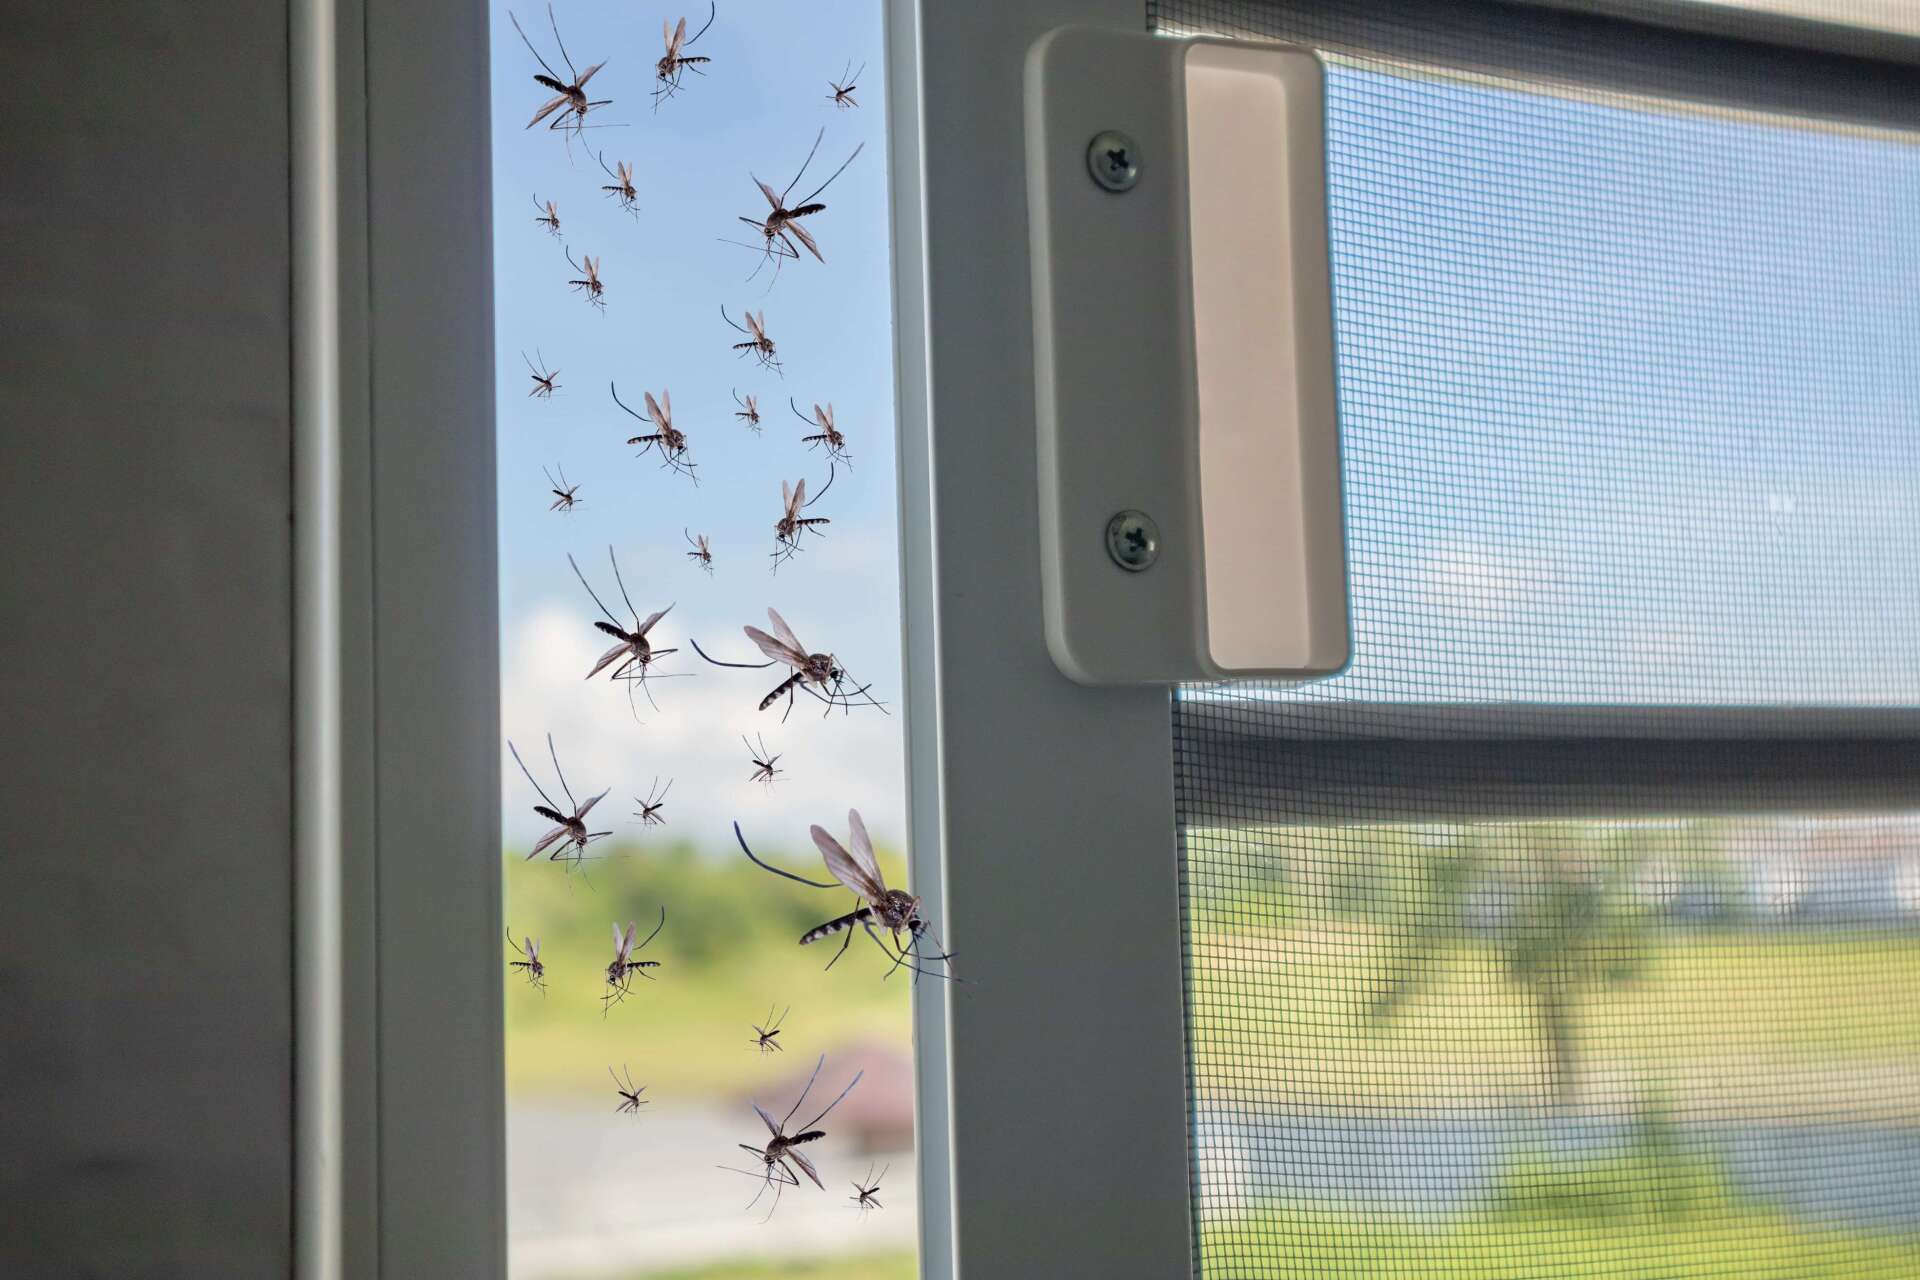 Mosquitos entering a house from an open door